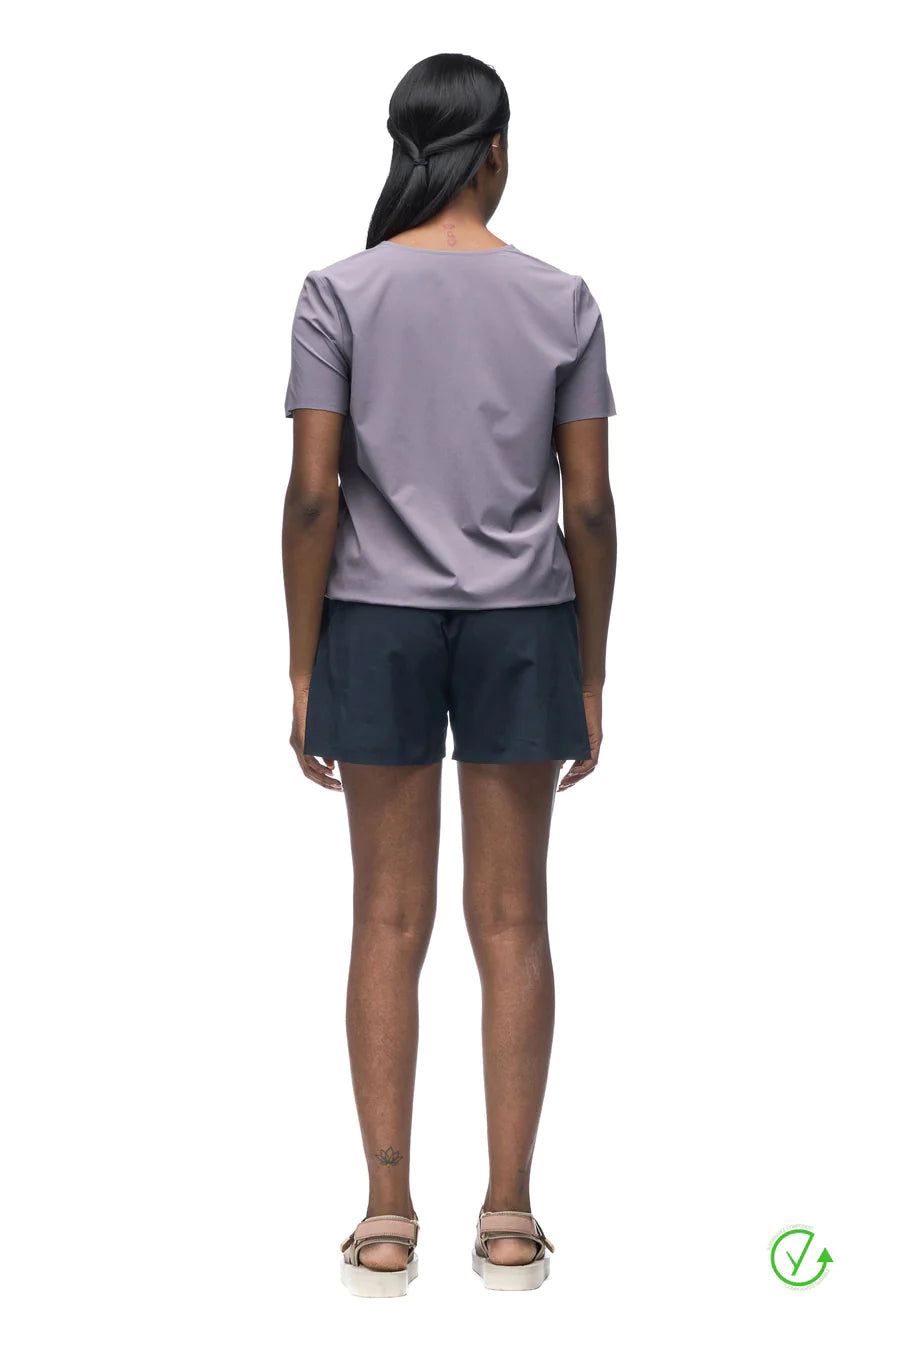 Indyeva Lagana Shorts - Black Clothing - Bottoms - Other Bottoms - Shorts by Indyeva | Grace the Boutique